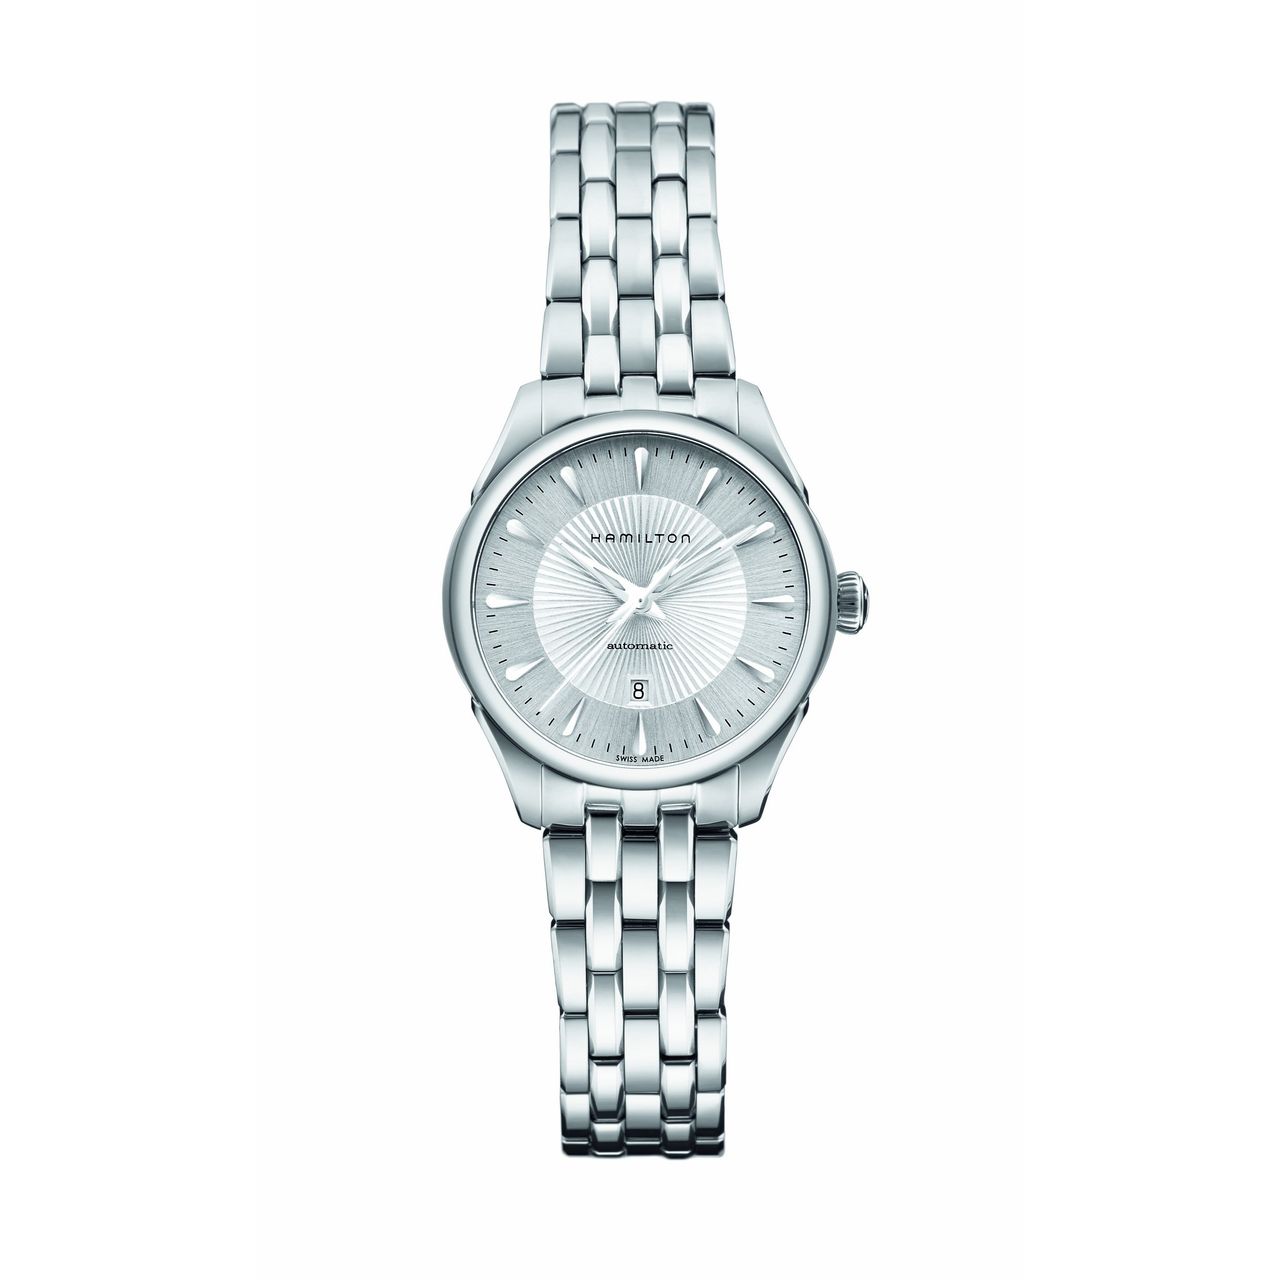 Hamilton JazzMaster Lady Auto Women's watch #H42215151